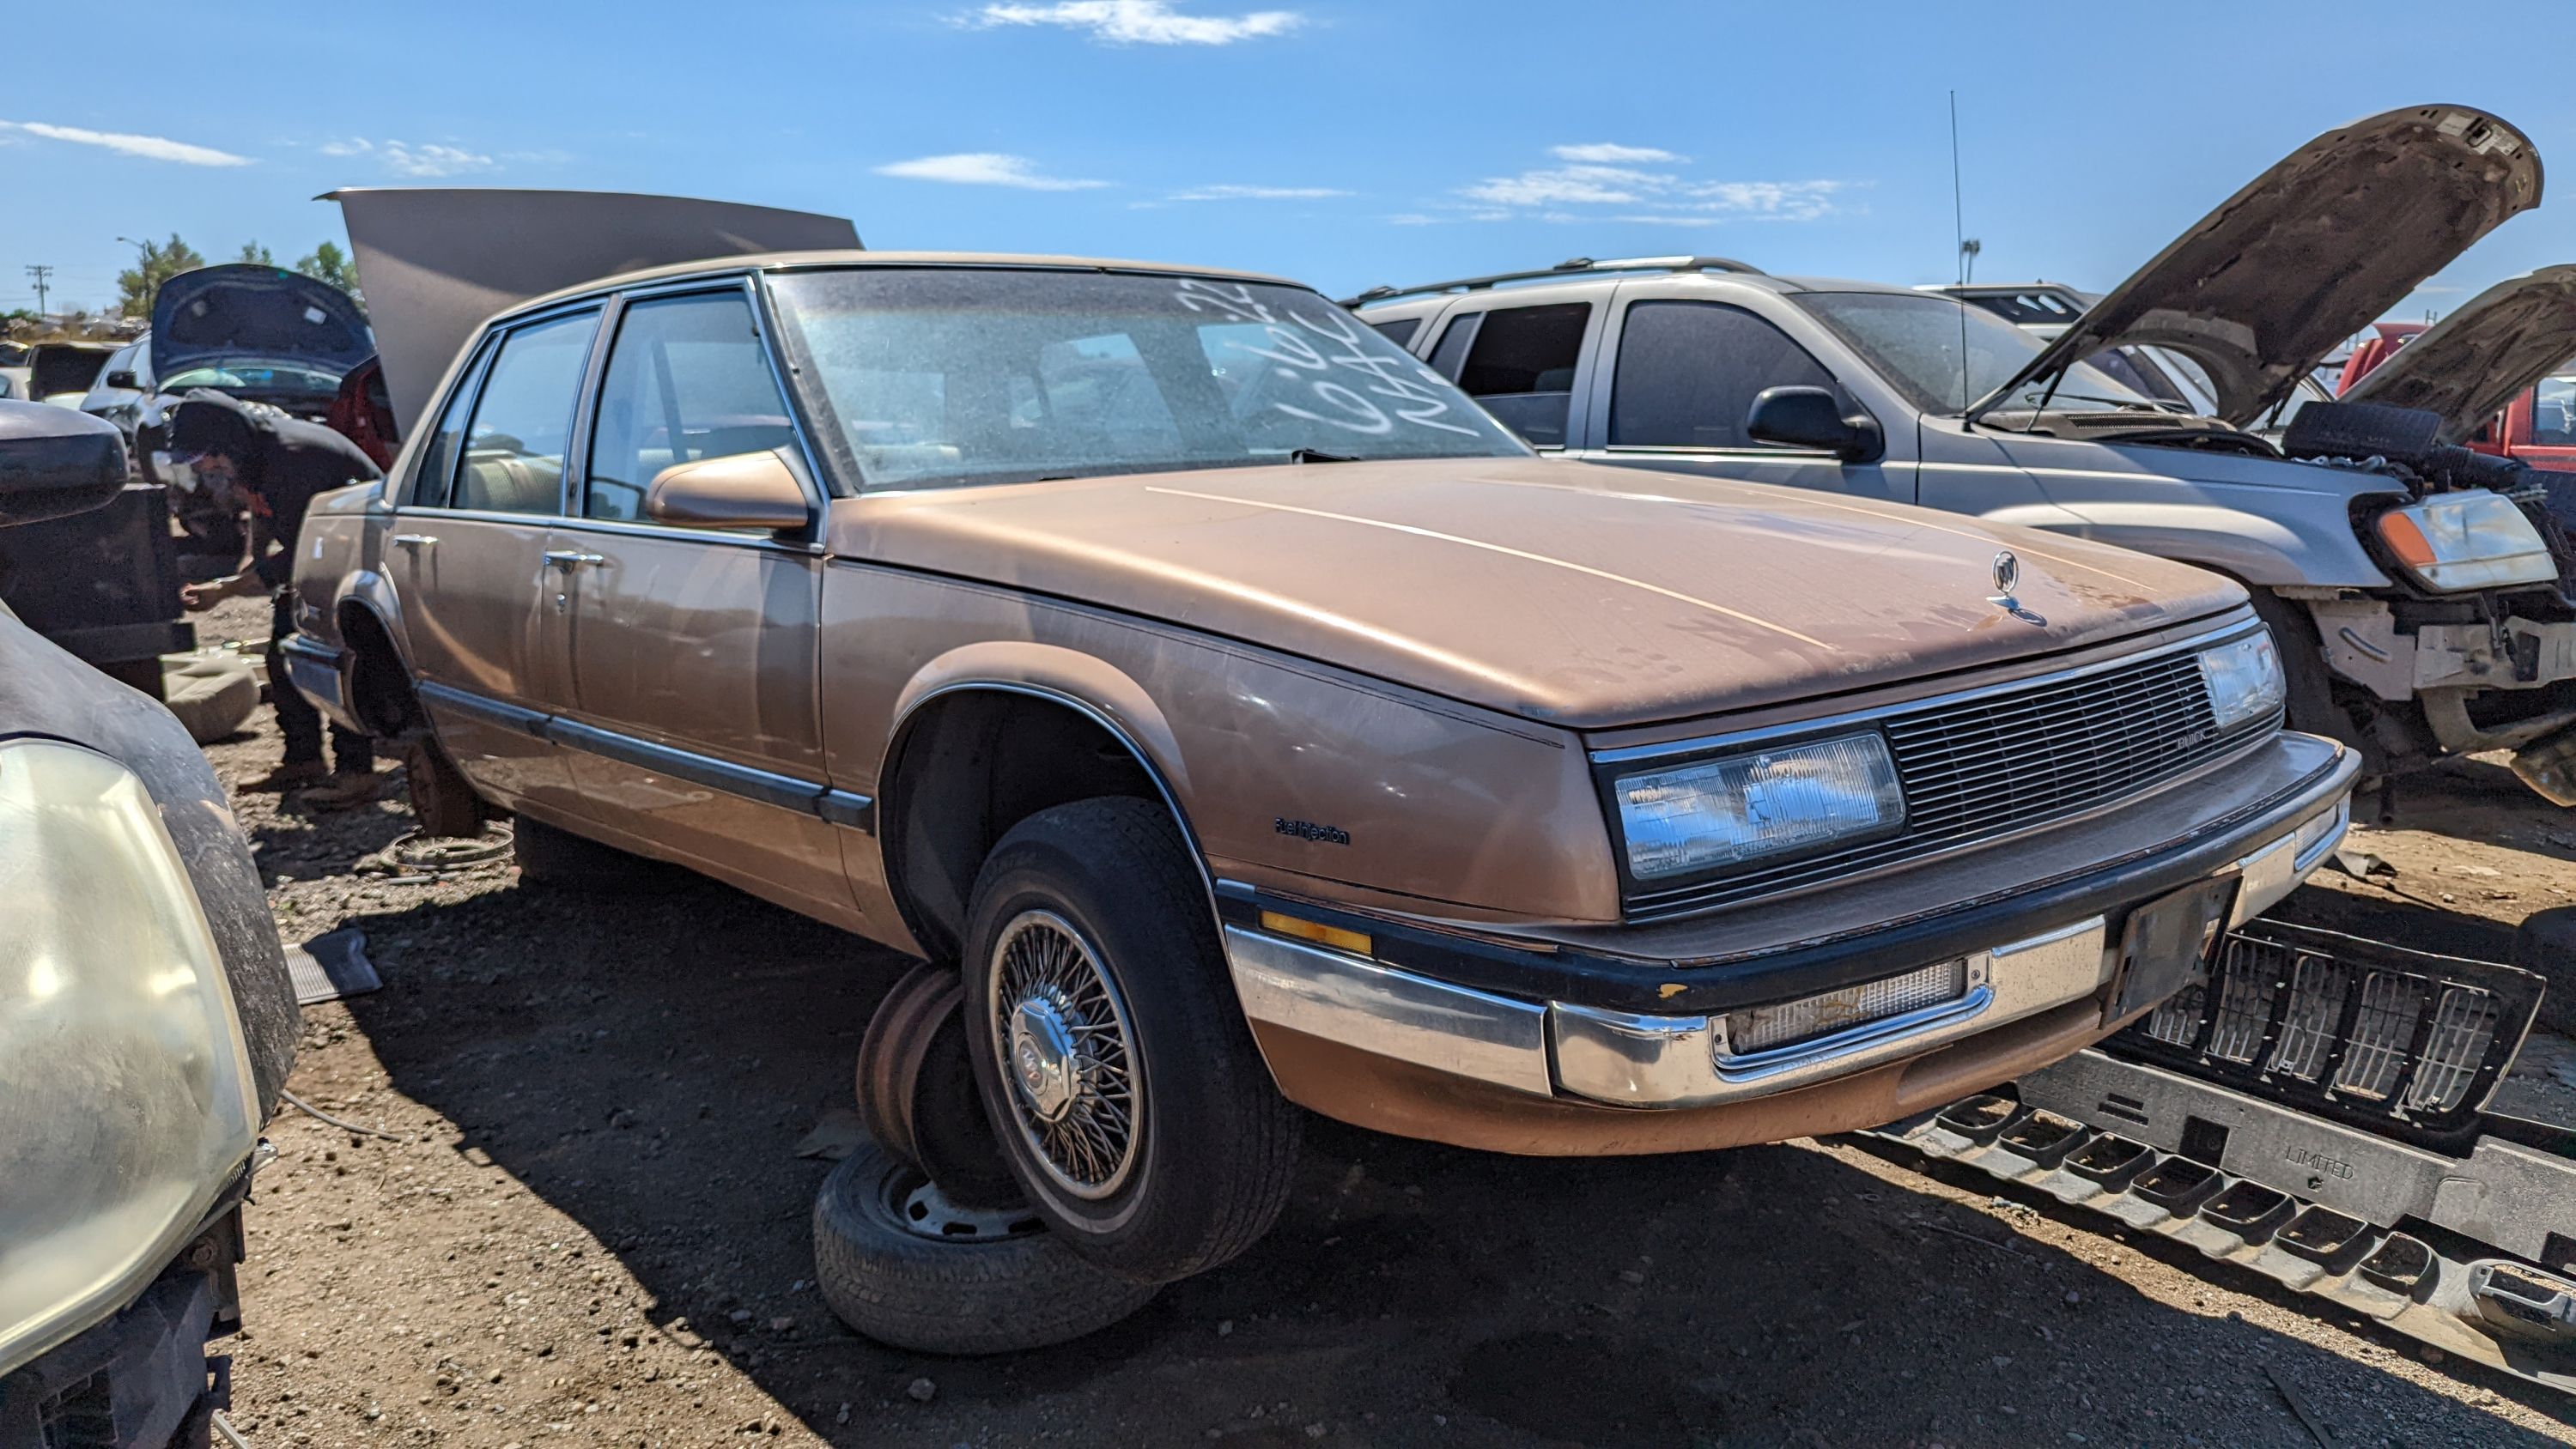 99 - 1988 Buick LeSabre in Colorado junkyard - Photo by Murilee Martin